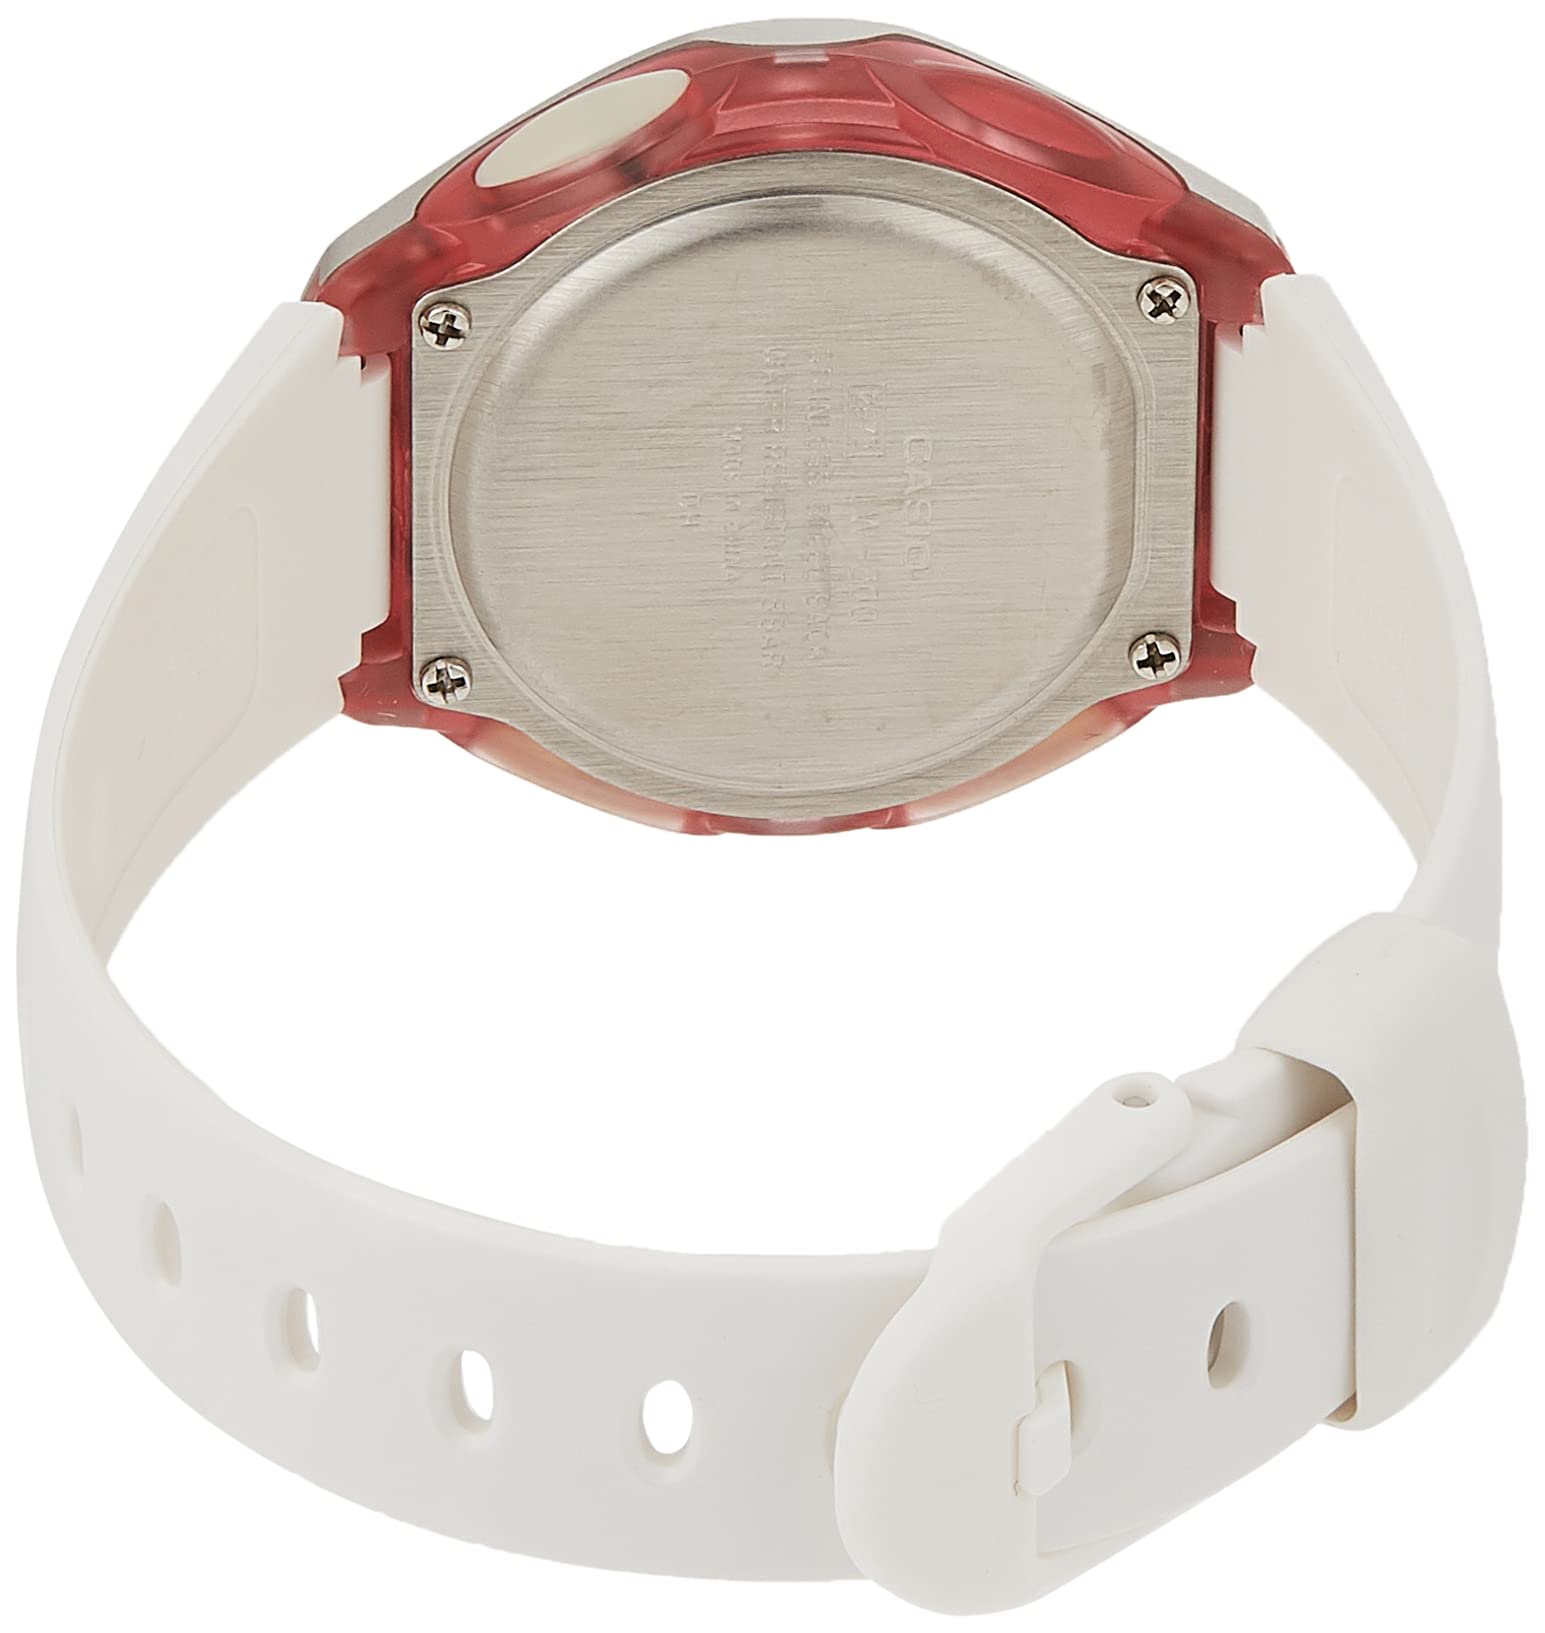 Casio Women's LW200-7AV Digital Watch with White Resin Strap